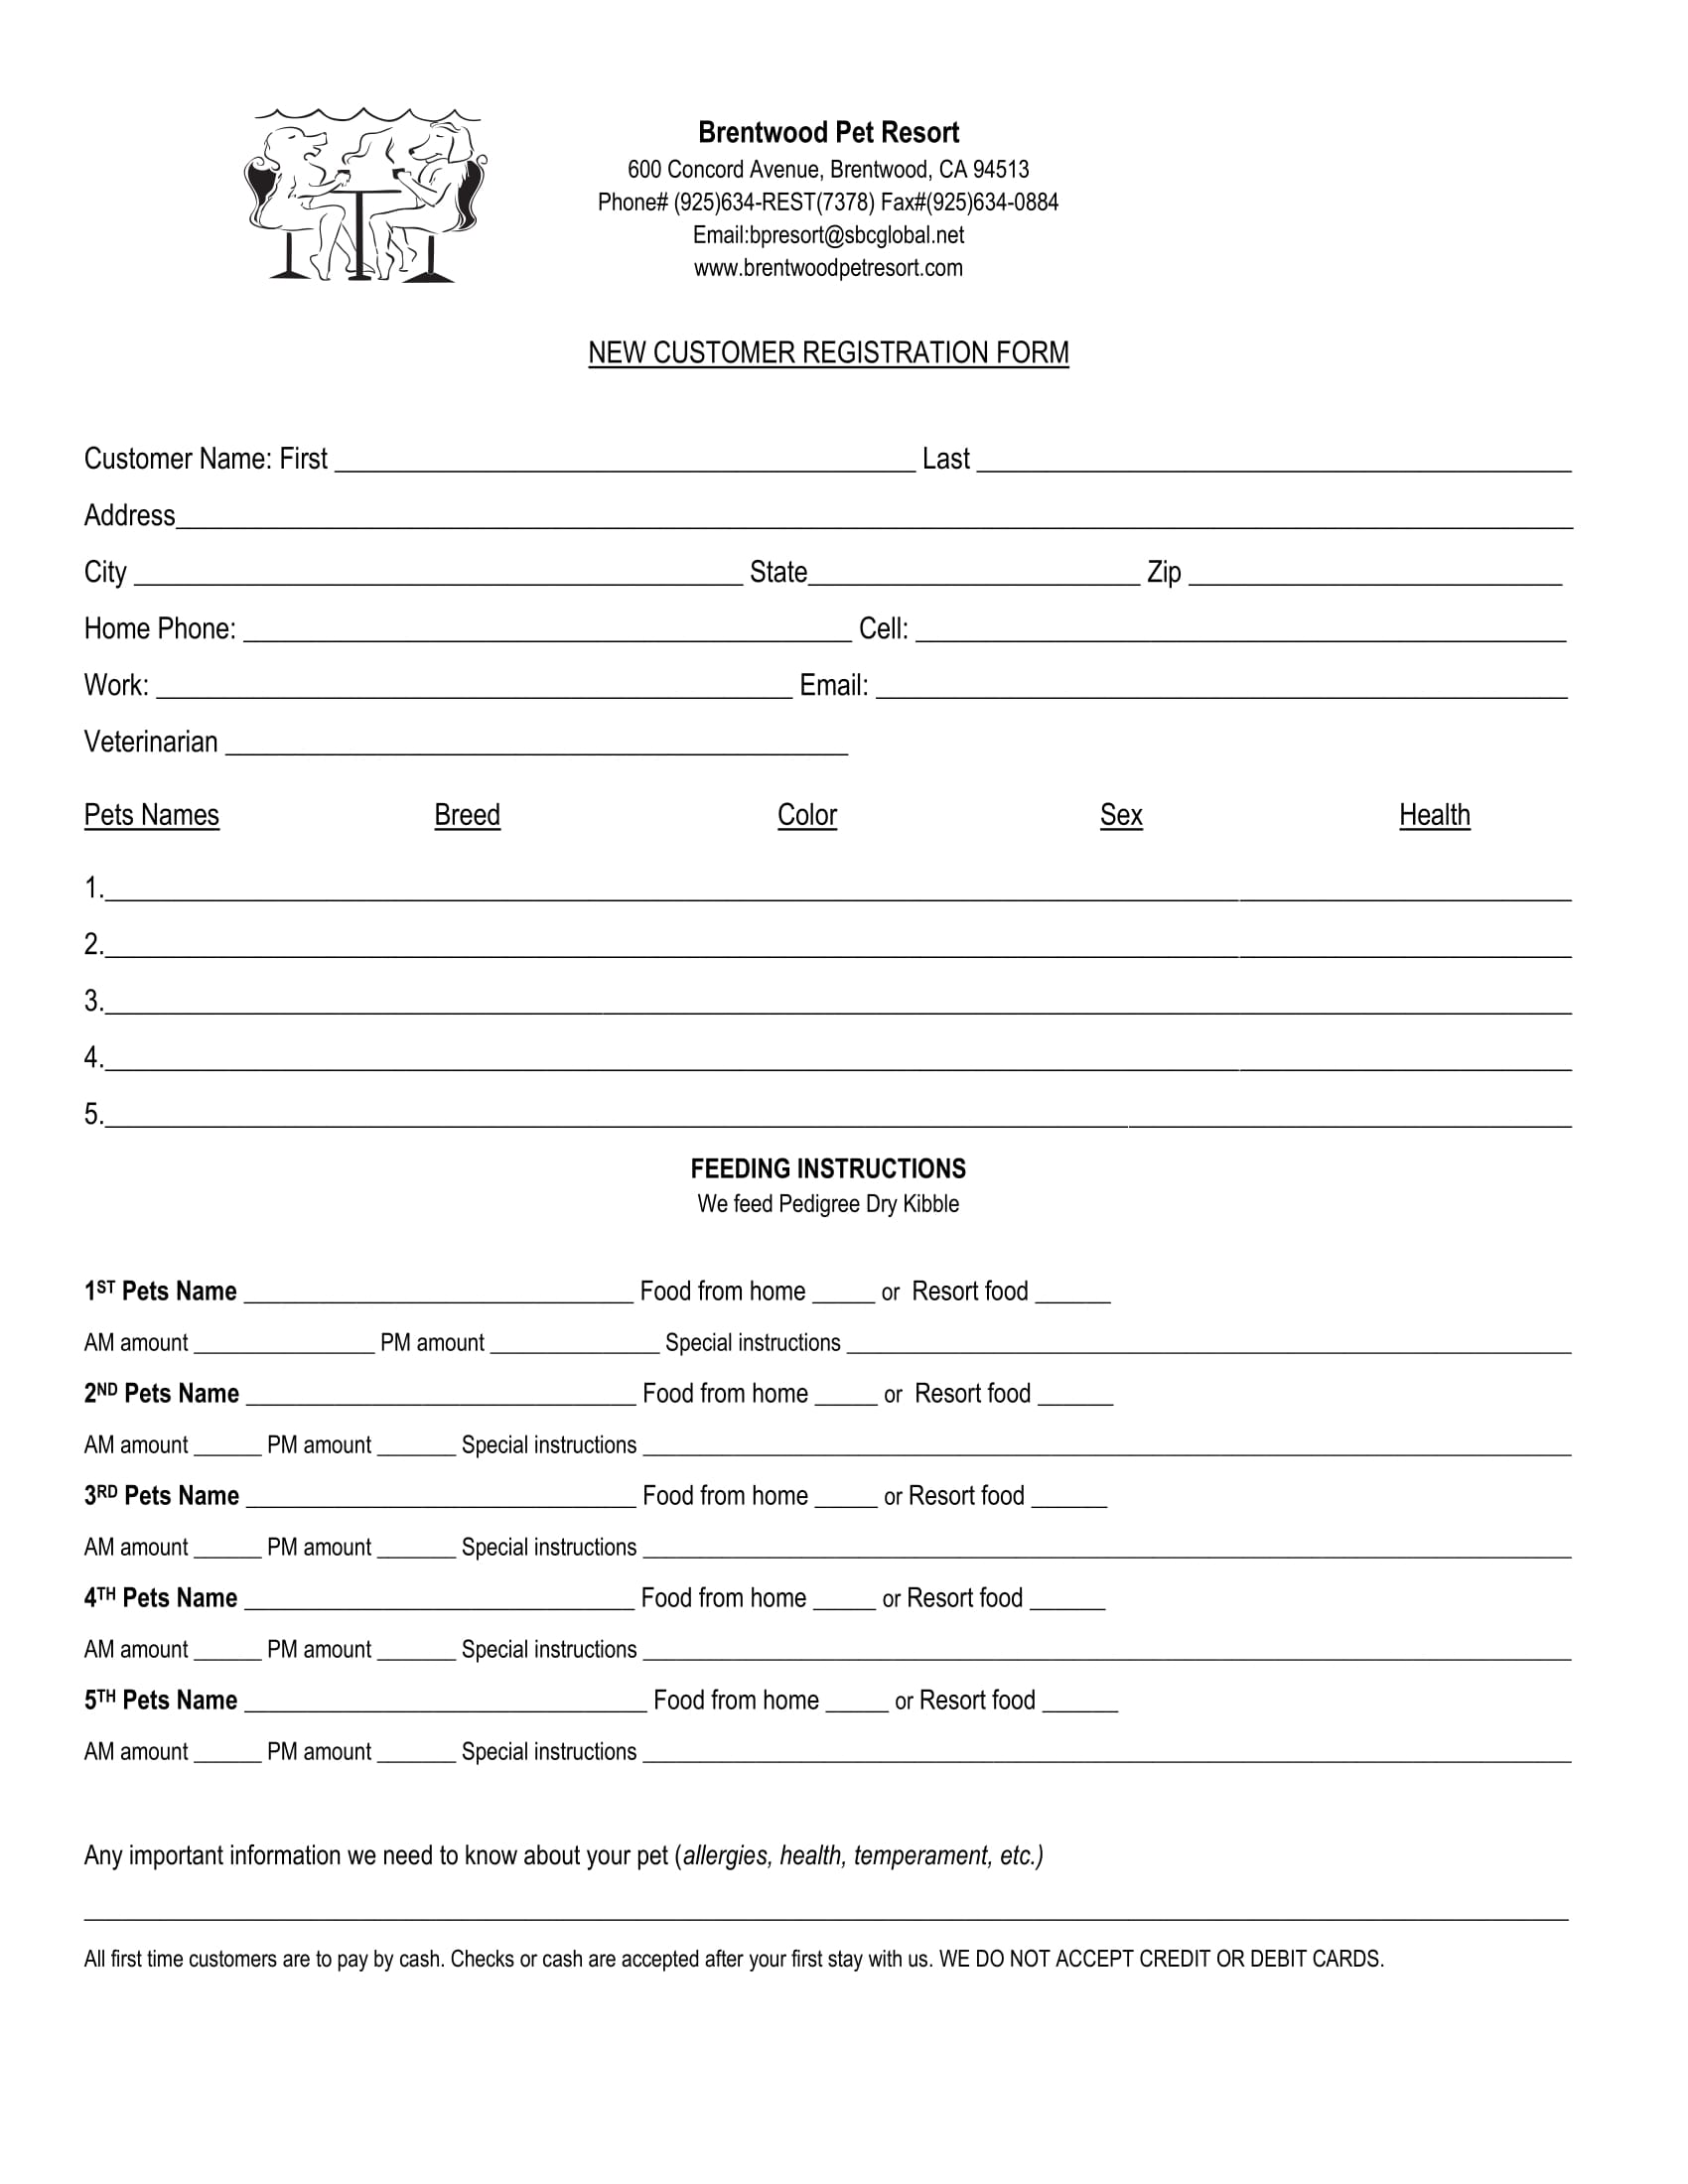 new customer pet registration form 1